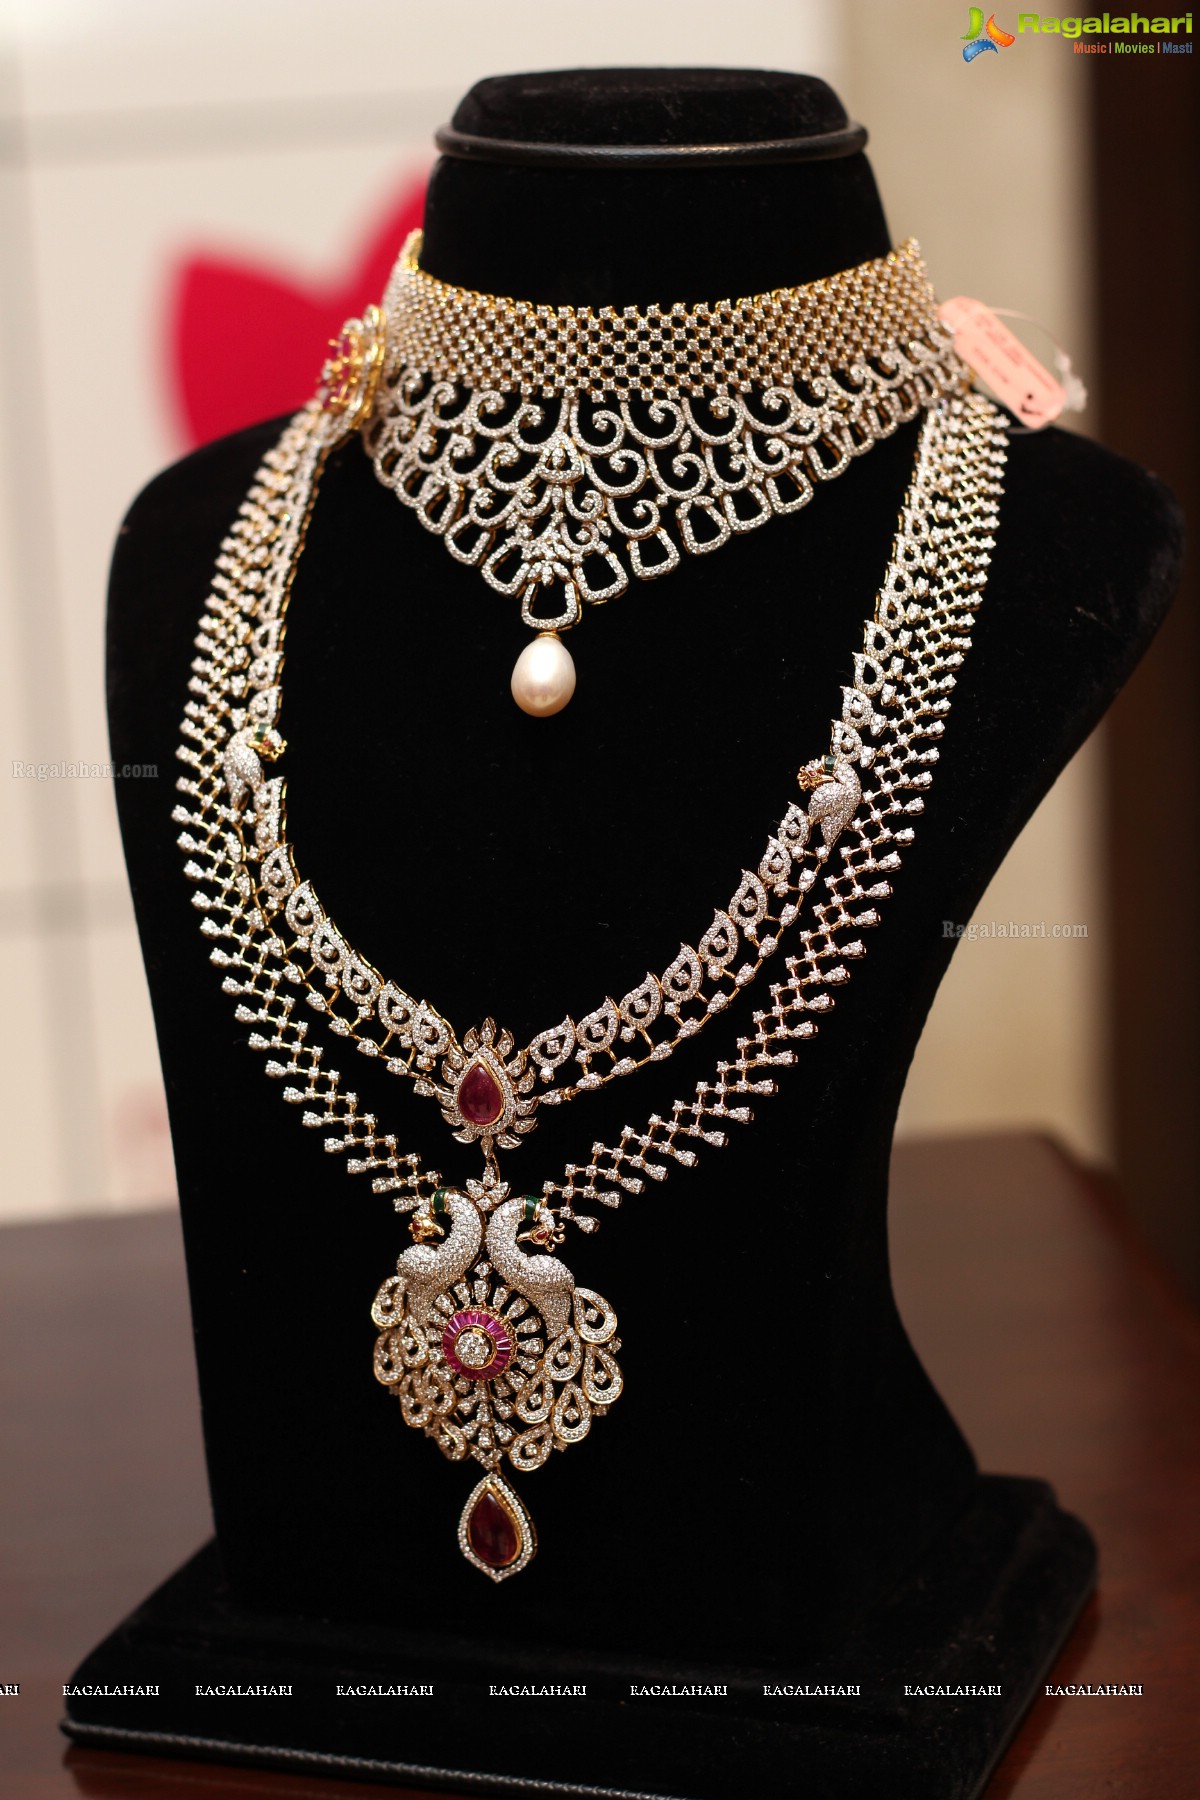 Manepally Jewellers - Designer Diamond Jewellery Collection Launch, Hyderabad